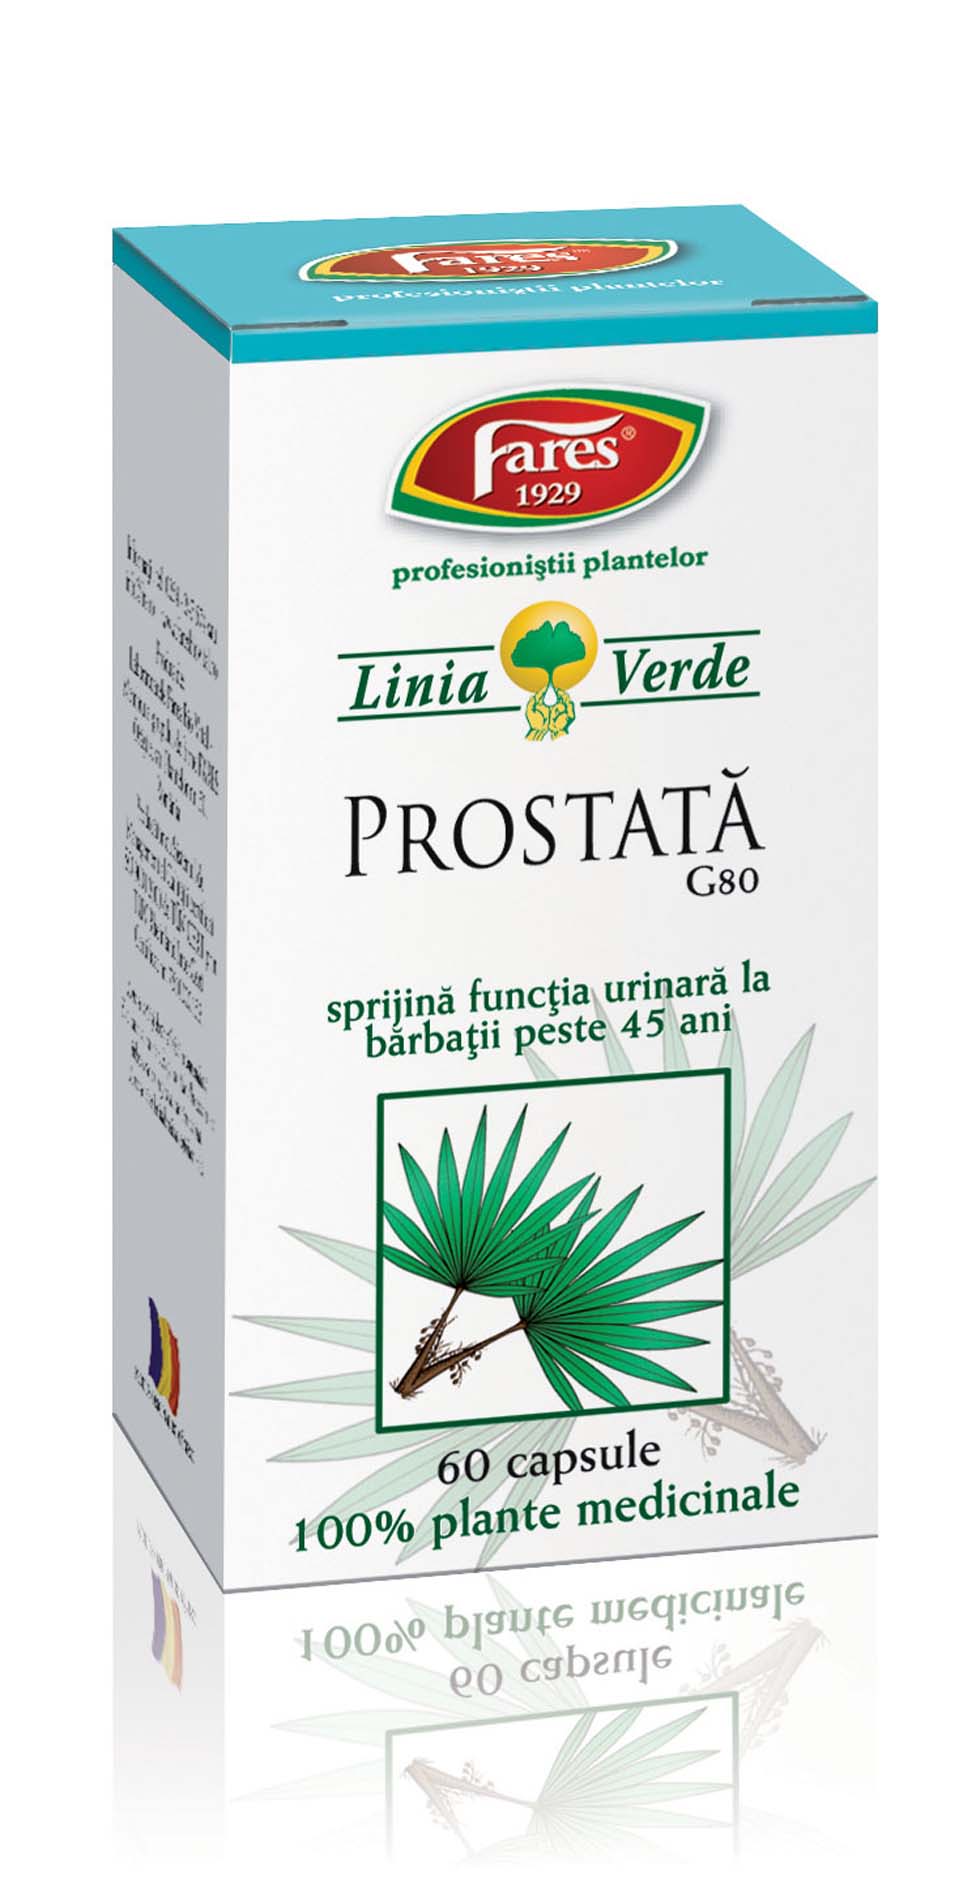 ceai prostata forum)